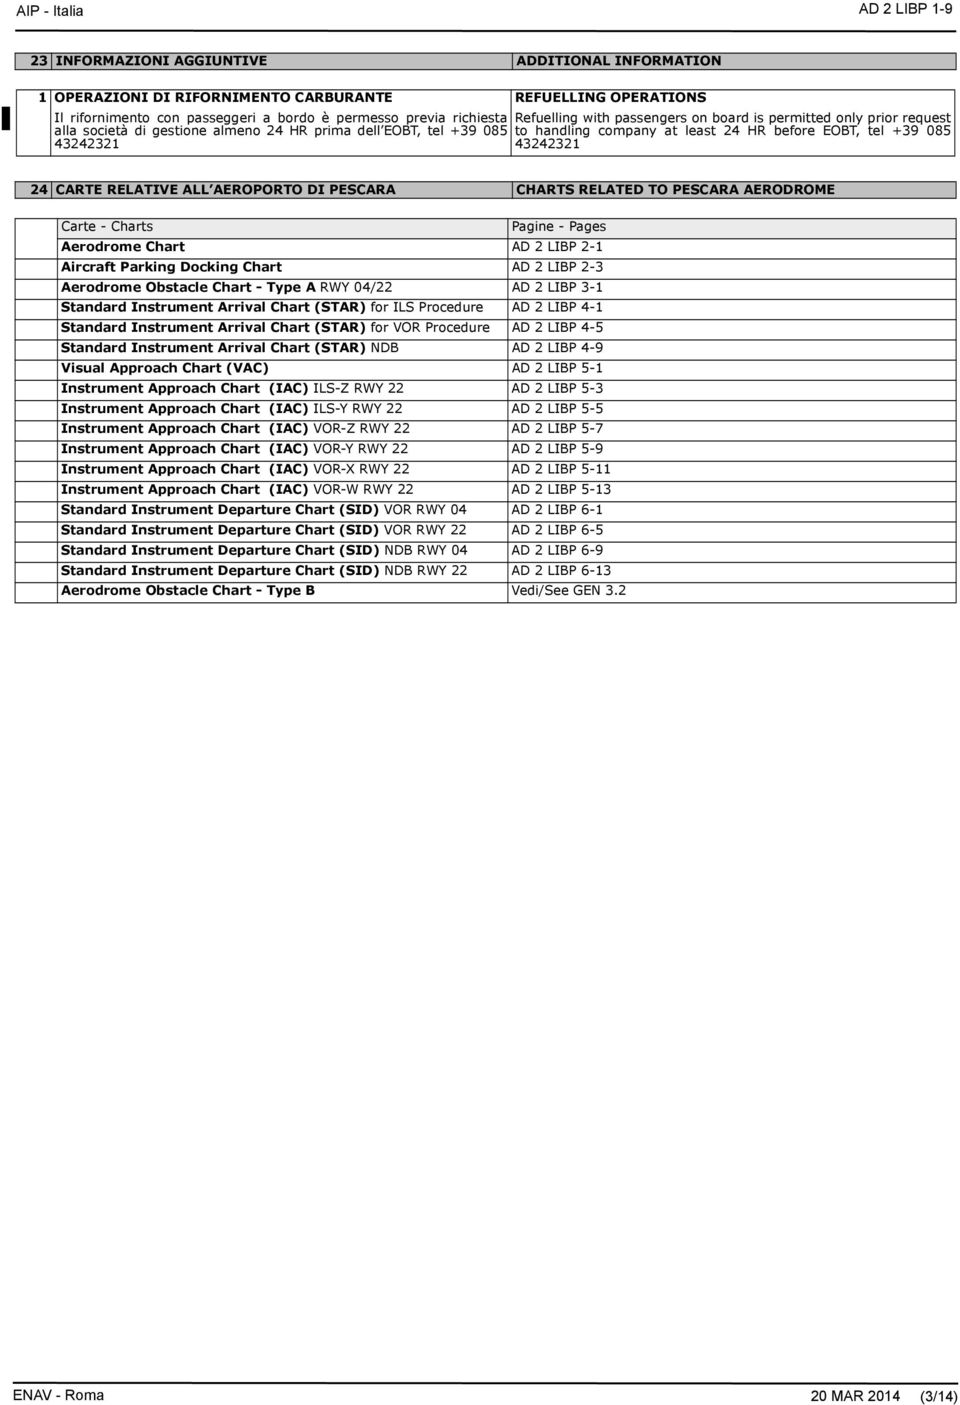 +39 085 43242321 43242321 24 CARTE RELATIVE ALL AEROPORTO DI PESCARA CHARTS RELATED TO PESCARA AERODROME Carte - Charts Pagine - Pages Aerodrome Chart AD 2 LIBP 2-1 Aircraft Parking Docking Chart AD